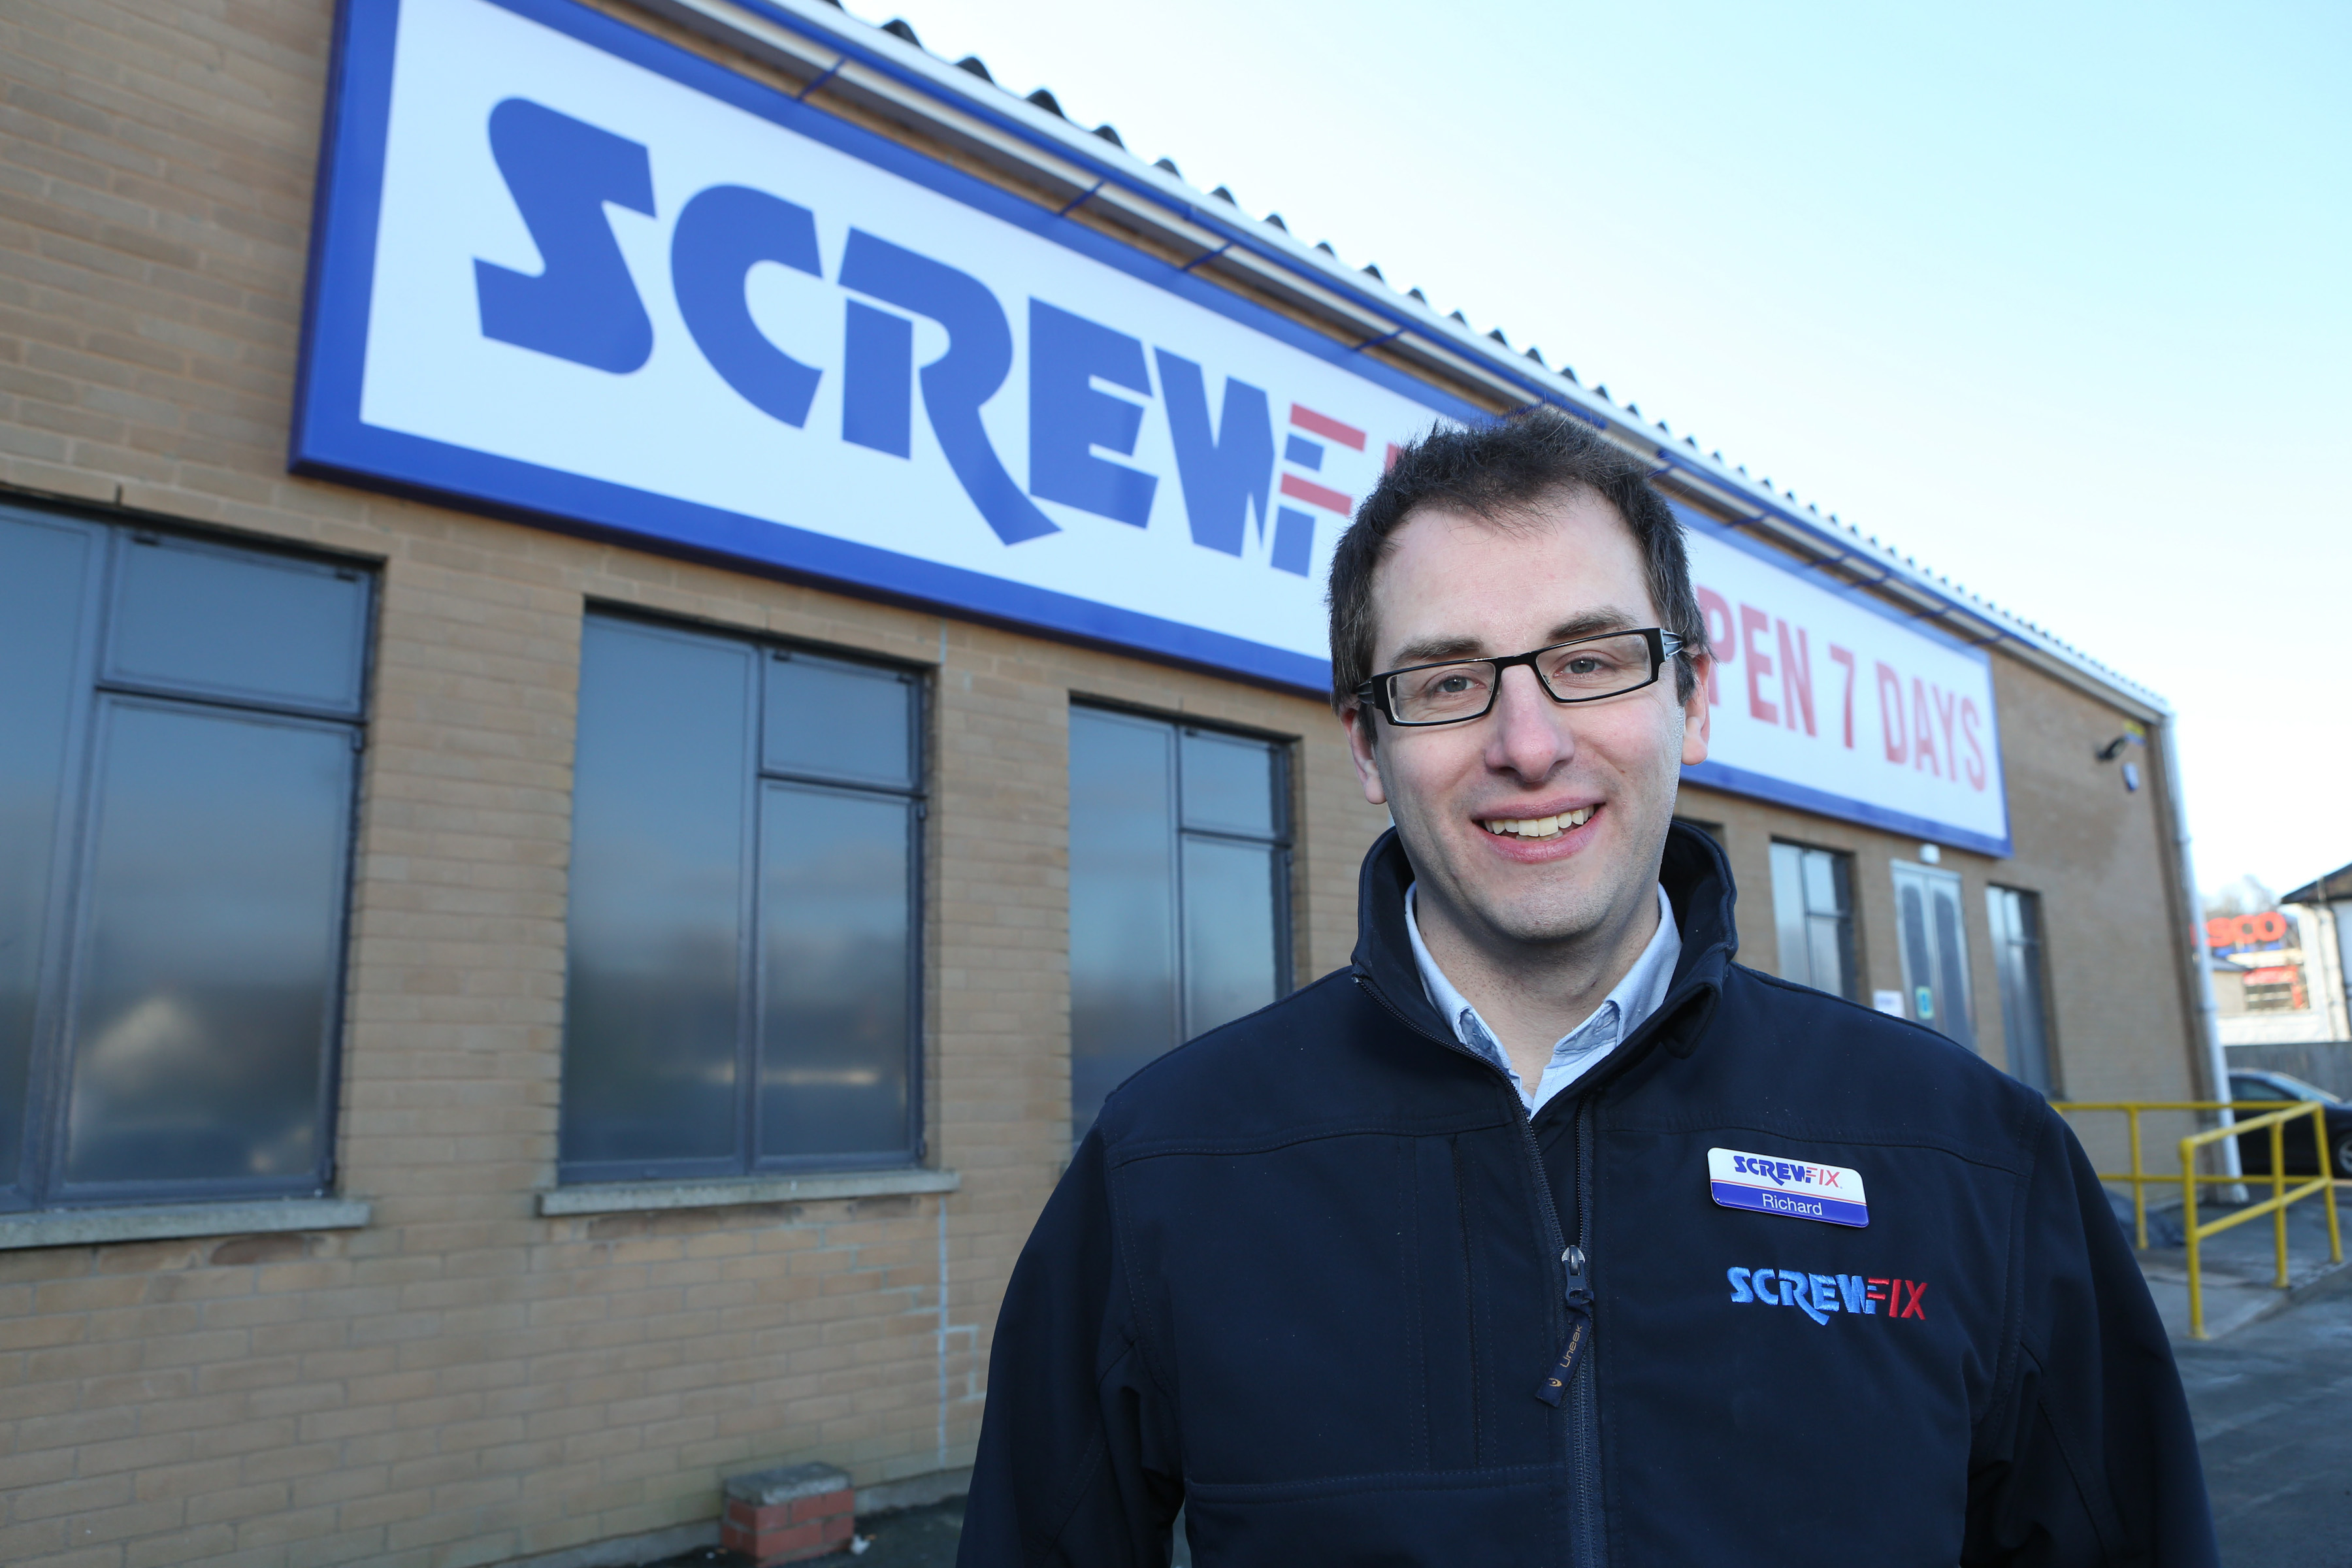 Newtown’s first Screwfix store is declared a runaway success